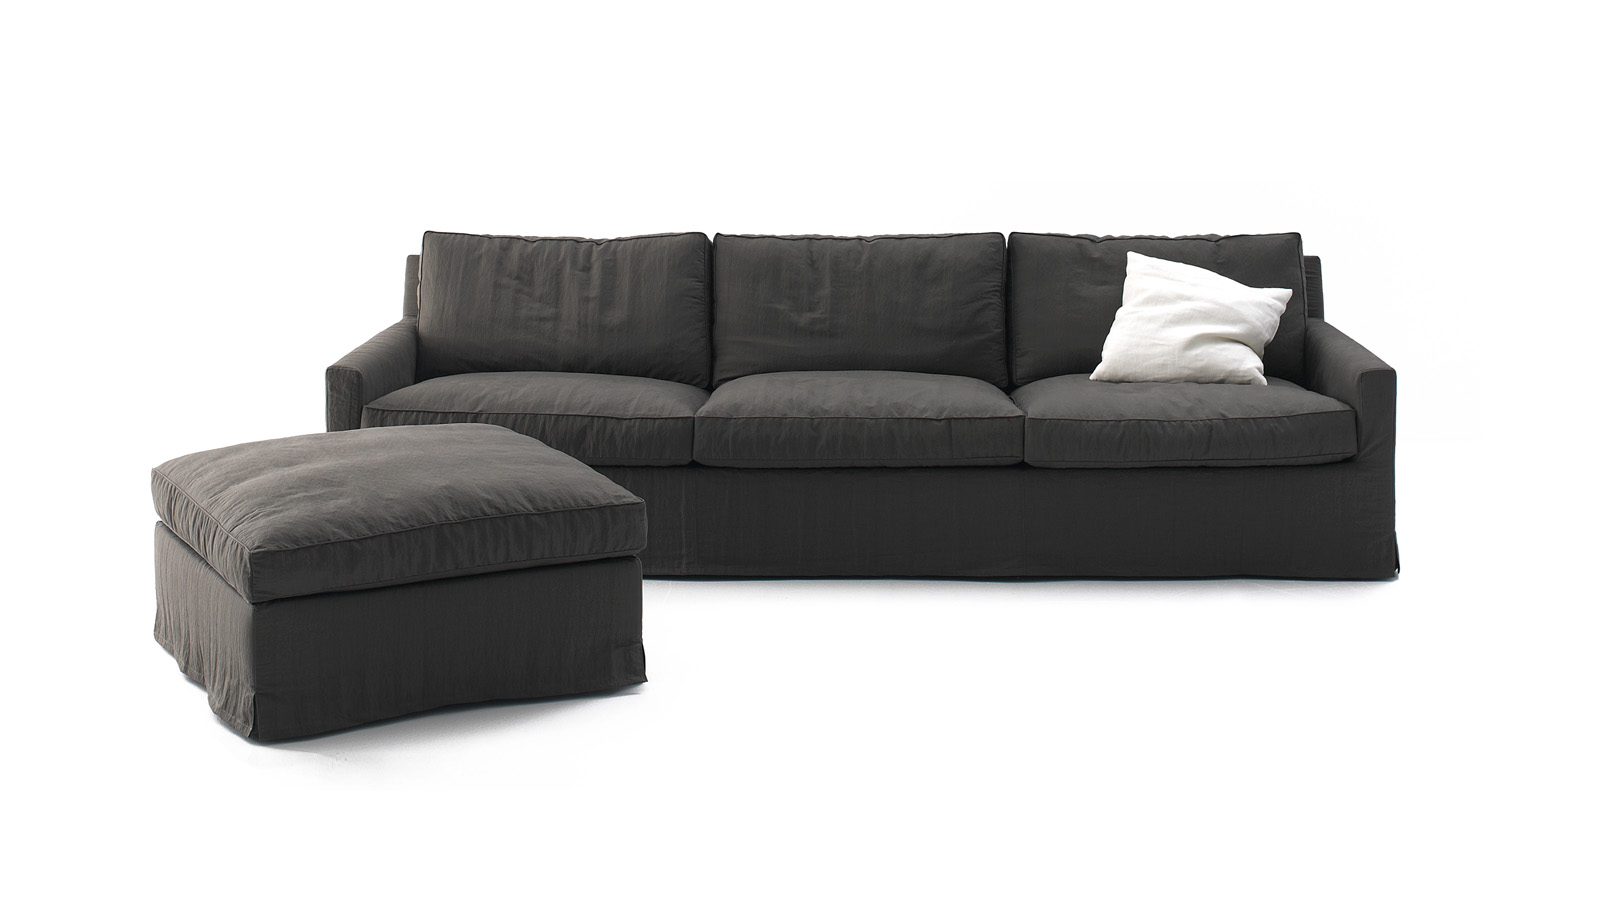 Arflex Cousy Sofa Design Vincent Van Duysen Arflex